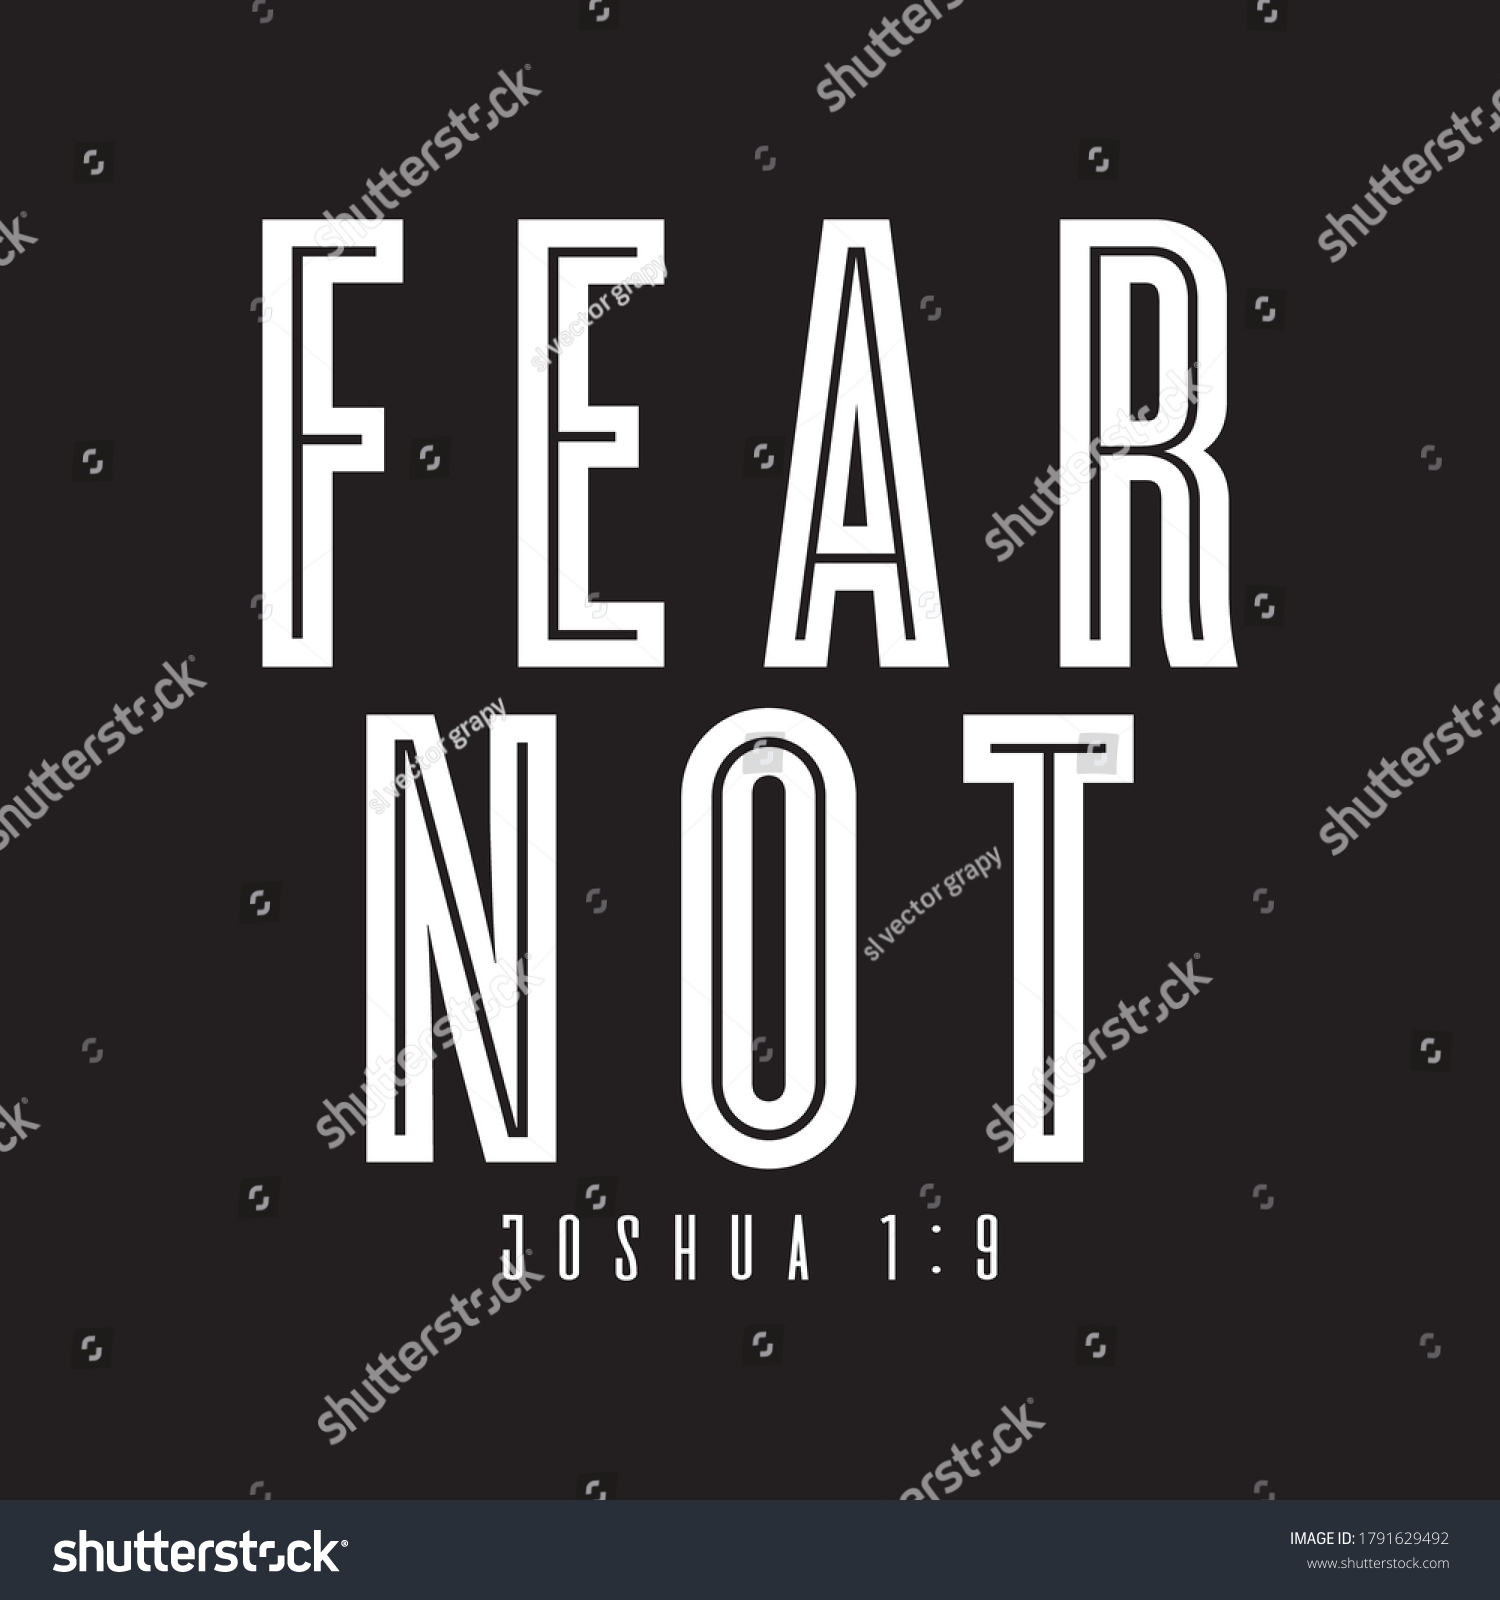 SVG of Fear Not t shirt design vector, black back ground, Joshua 1:9 svg